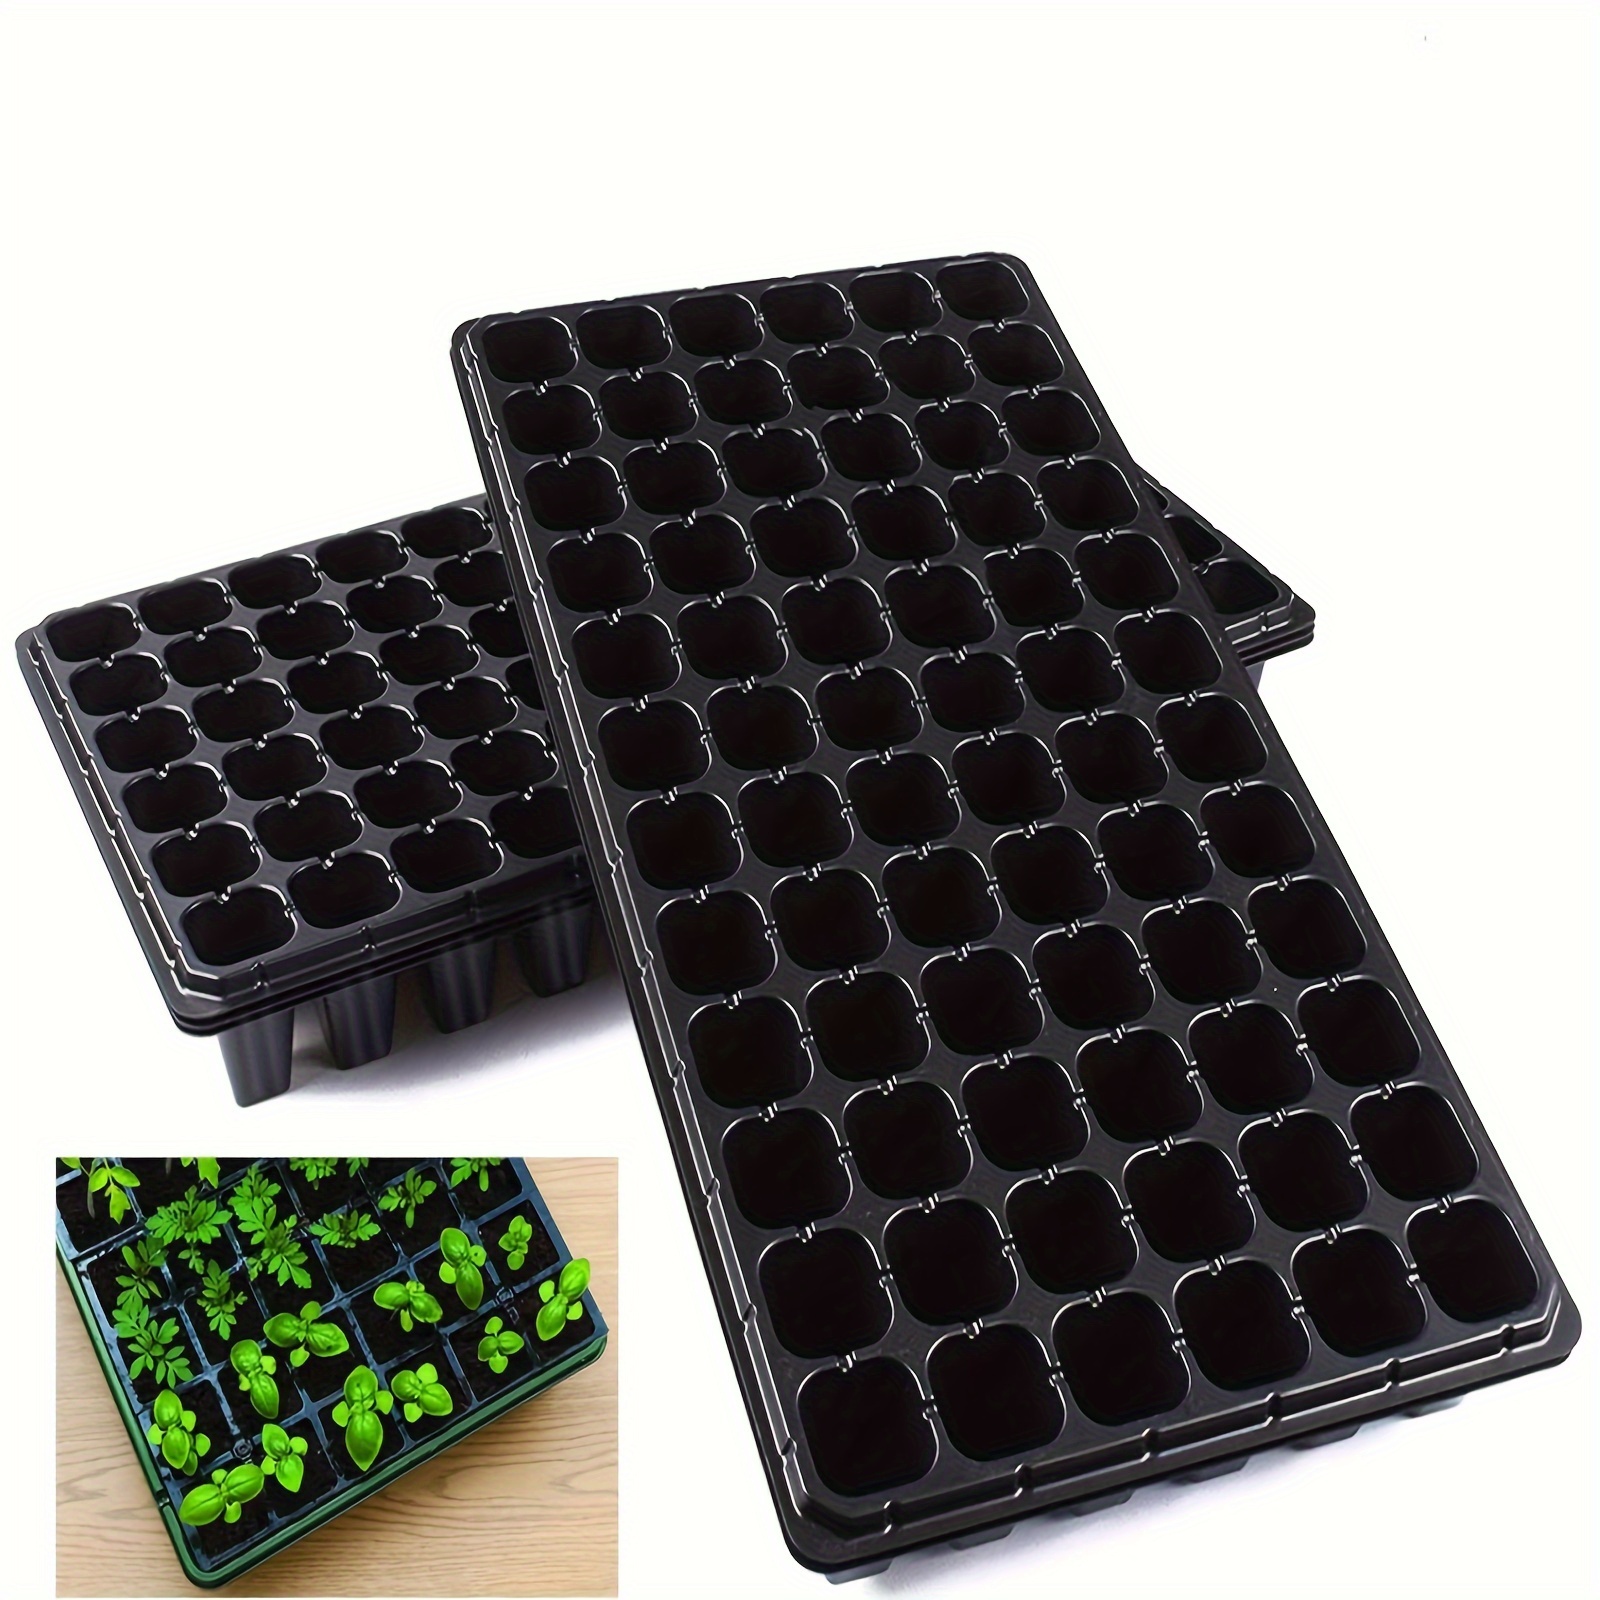 MOUYAT 14 Pack 15 x12 Inch Seed Starter Trays, Plastic Mesh Bottom Growing  Trays, Plant Germination Trays for Microgreens, Soil Blocks, Wheatgrass